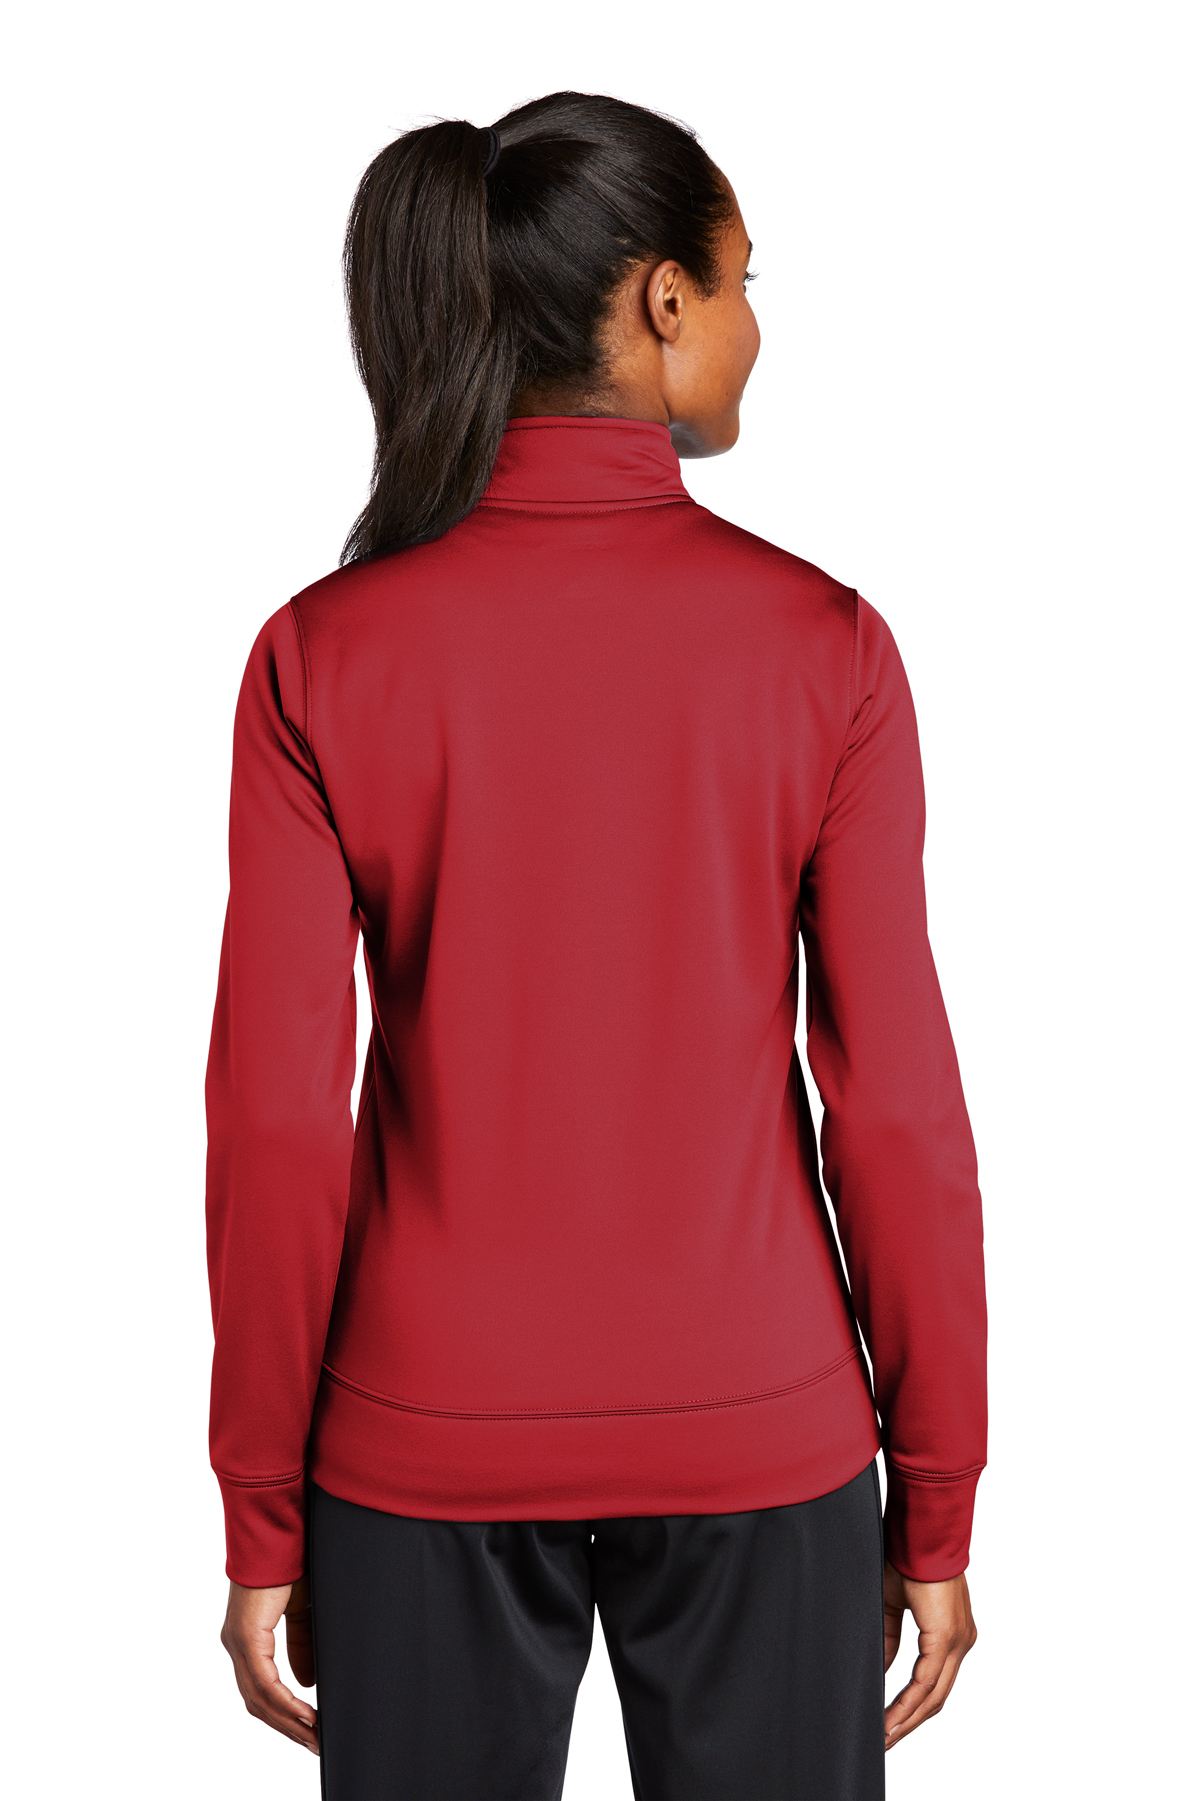 Red House - Ladies Sweater Fleece Full-Zip Jacket, Product